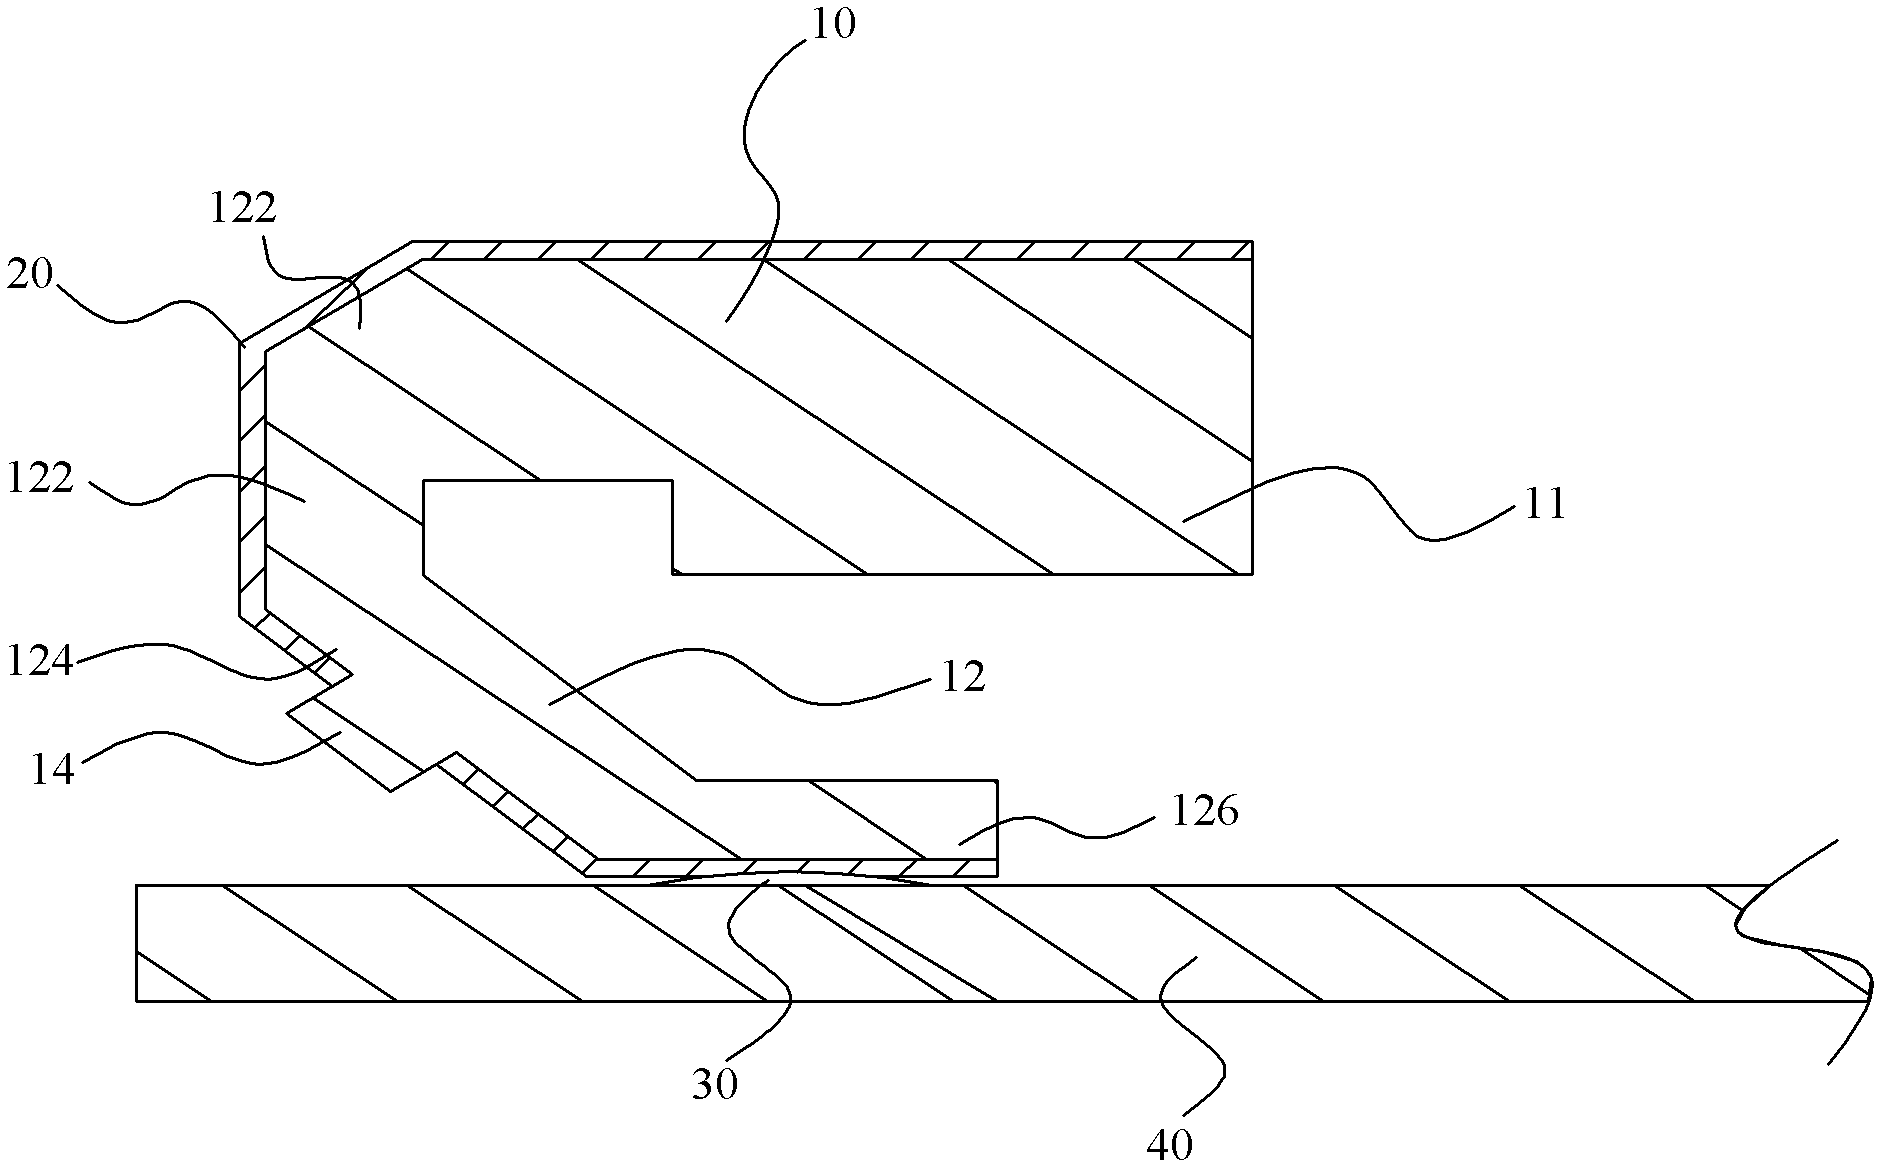 FPC (flexible printed circuit) antenna